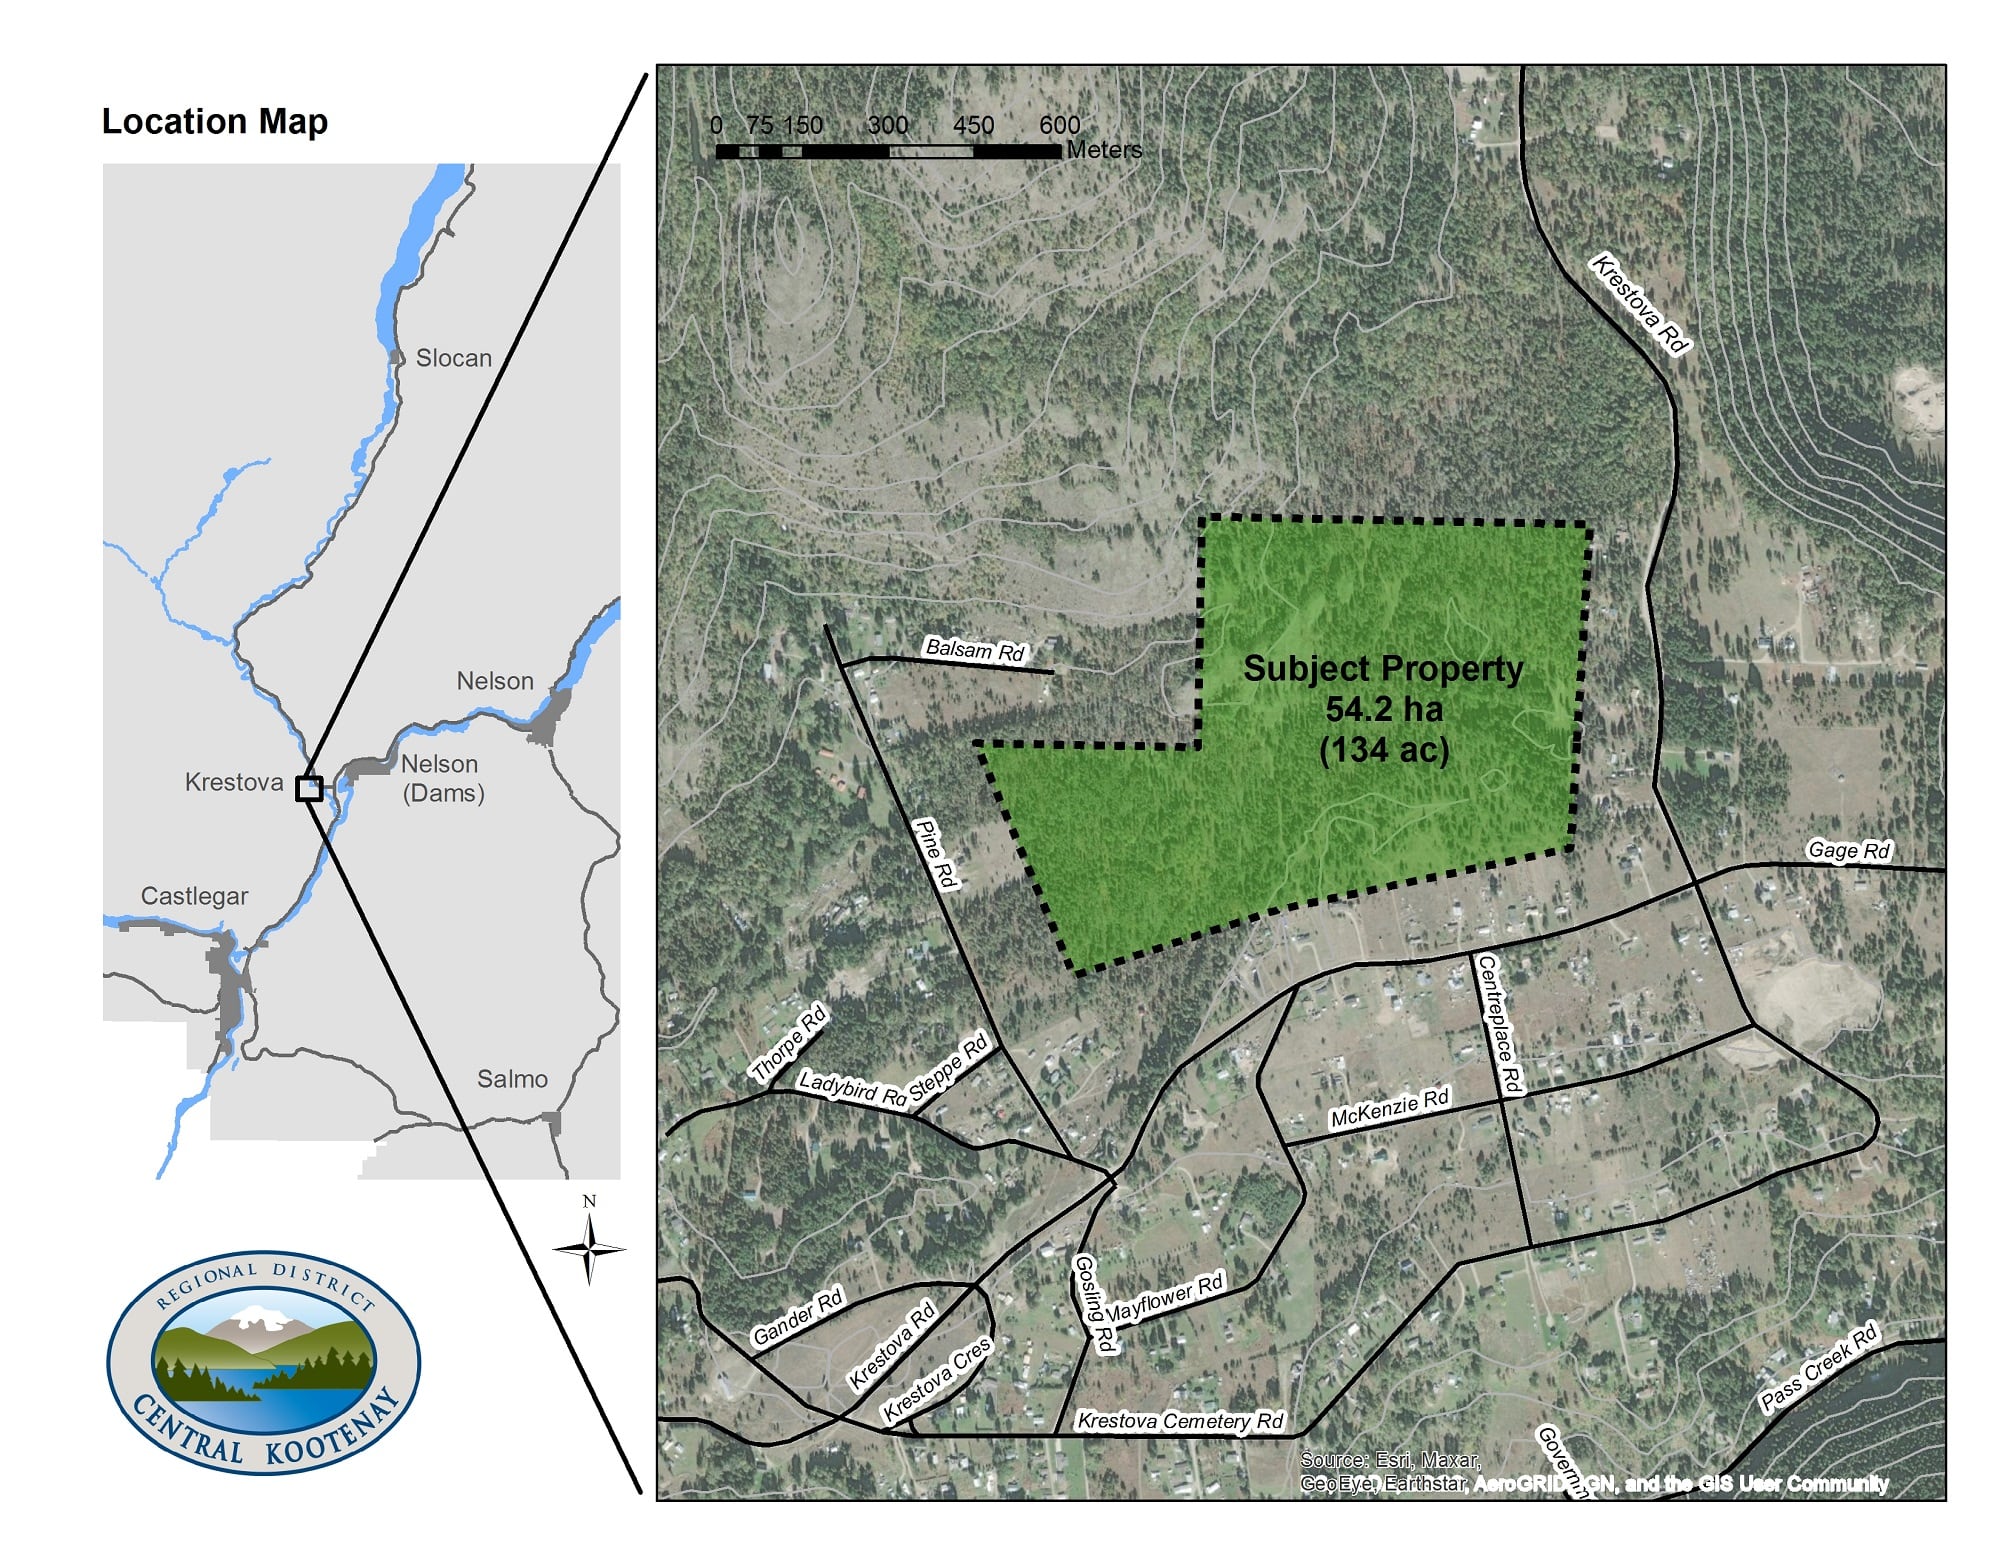 RDCK to purchase land in Krestova for regional parkland